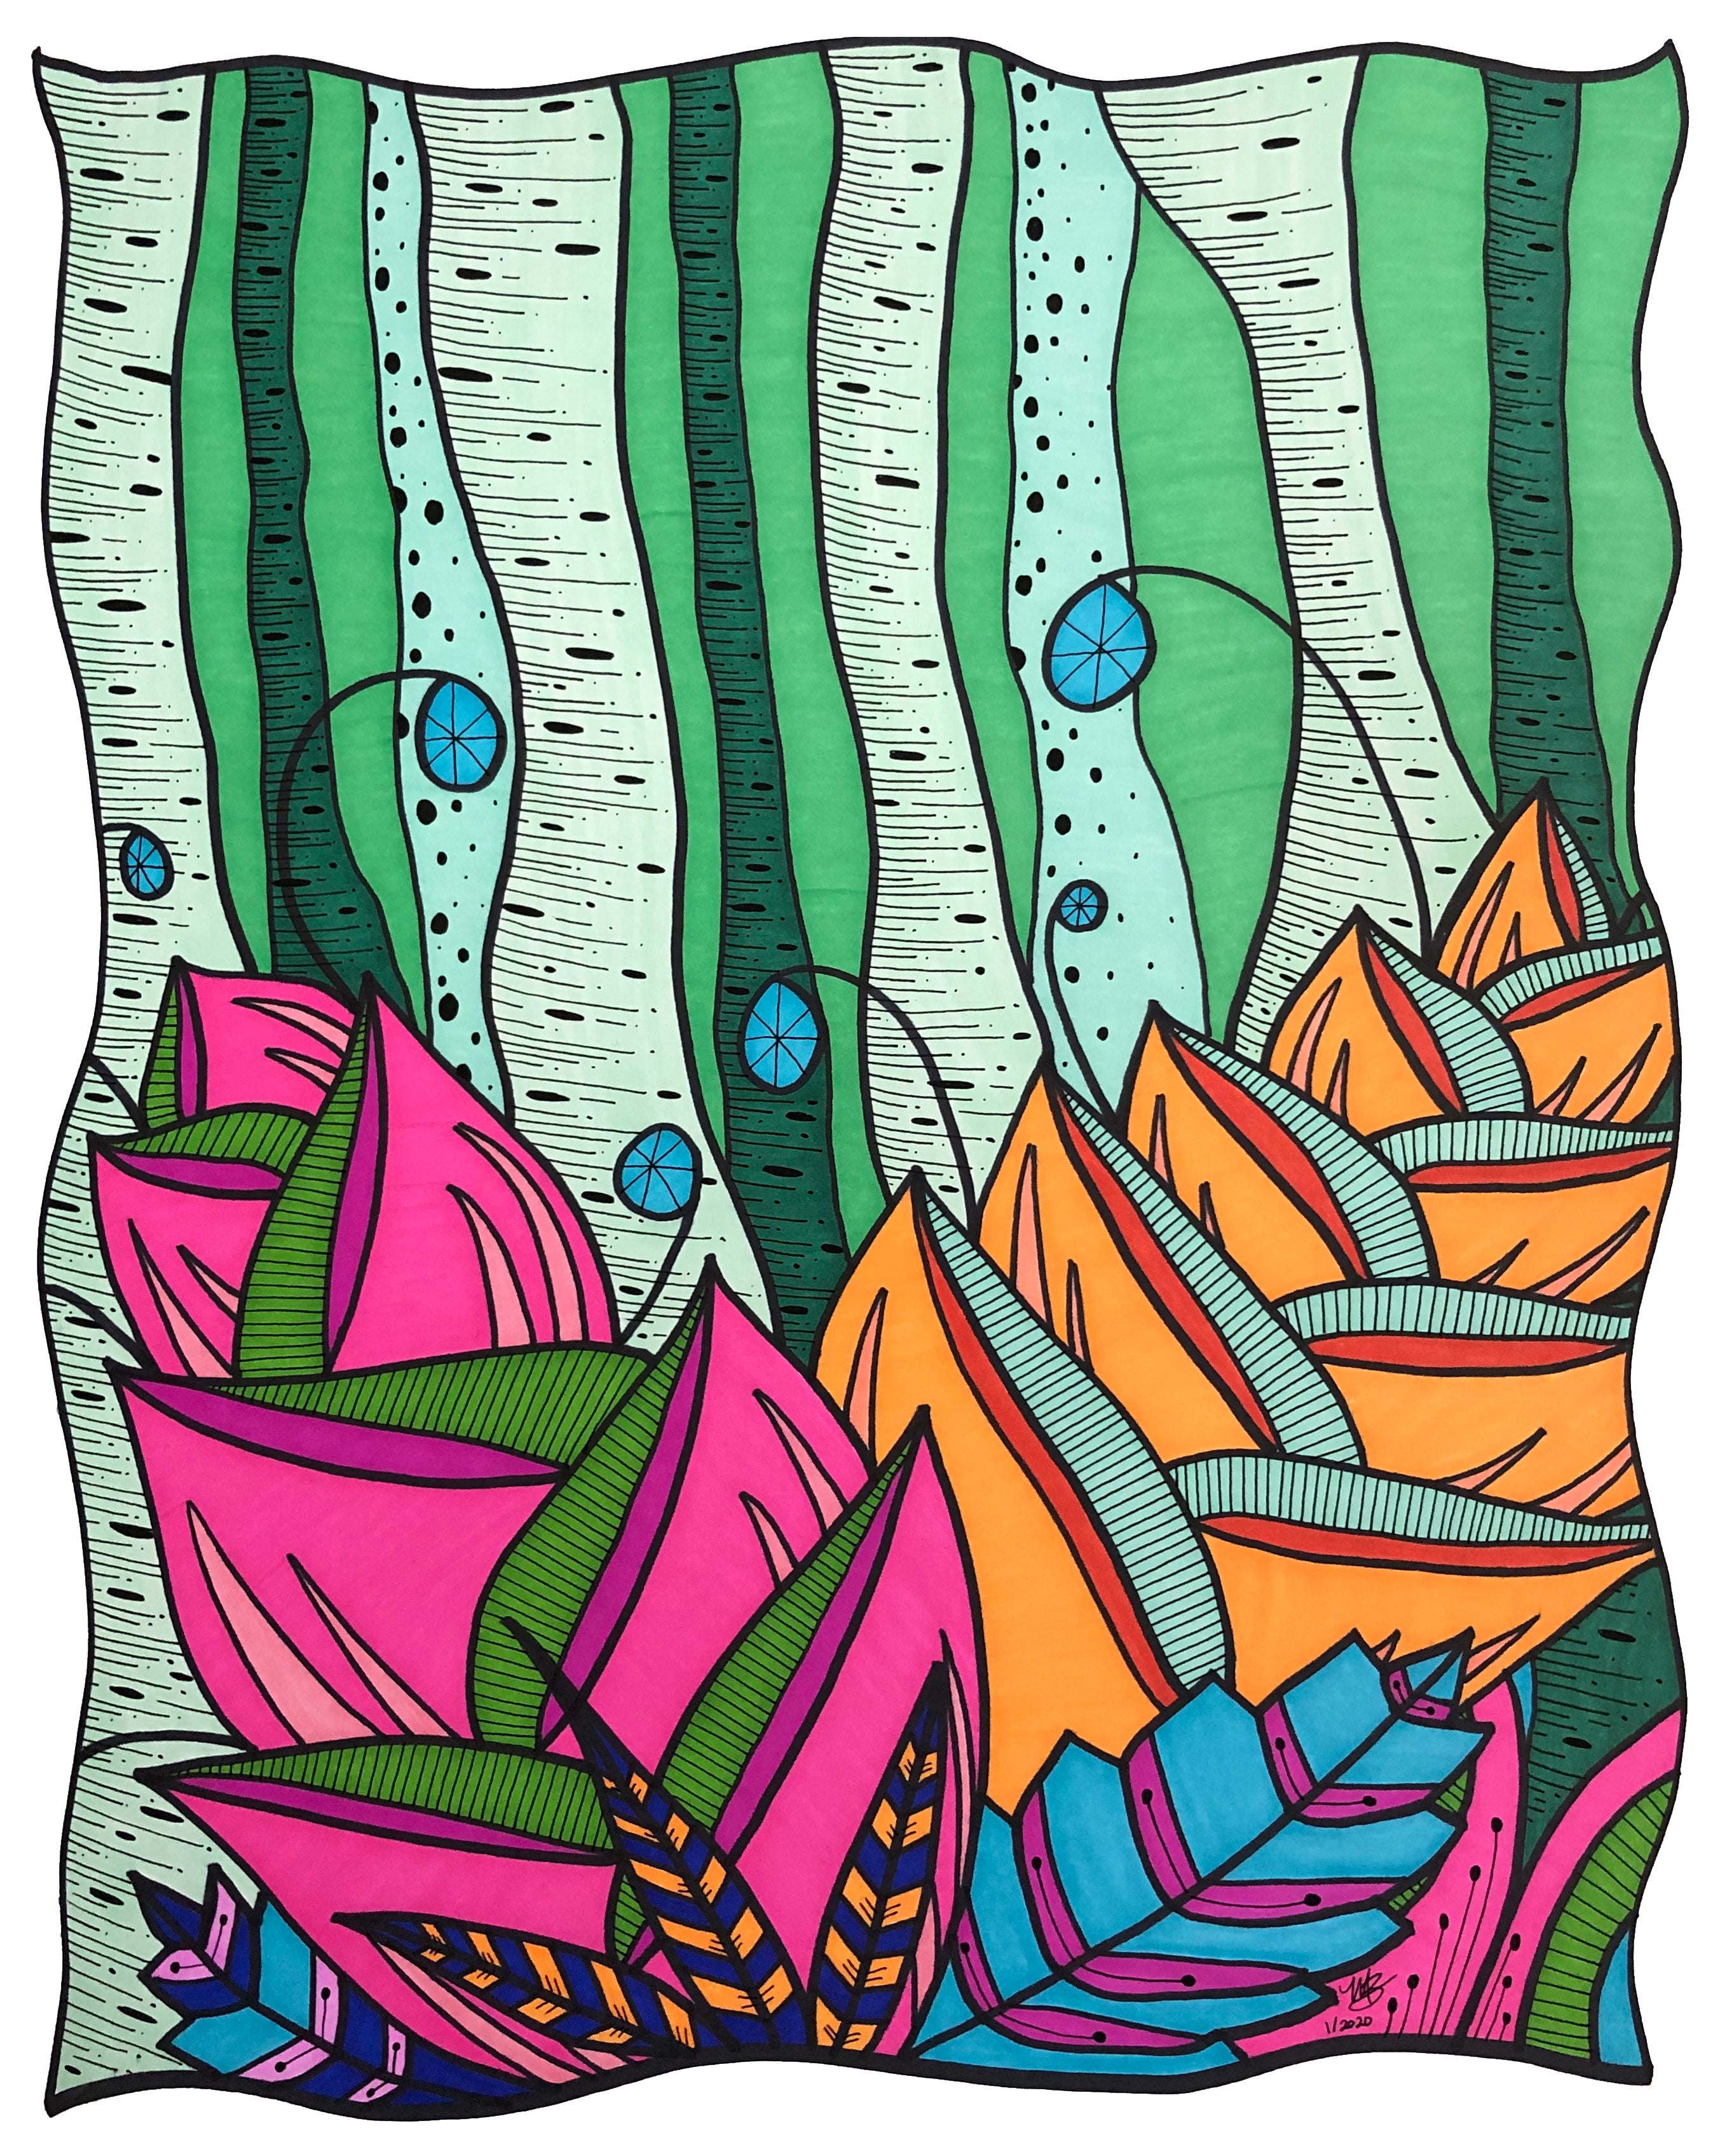 Forest Flowers-Original Illustration - marjorieblume